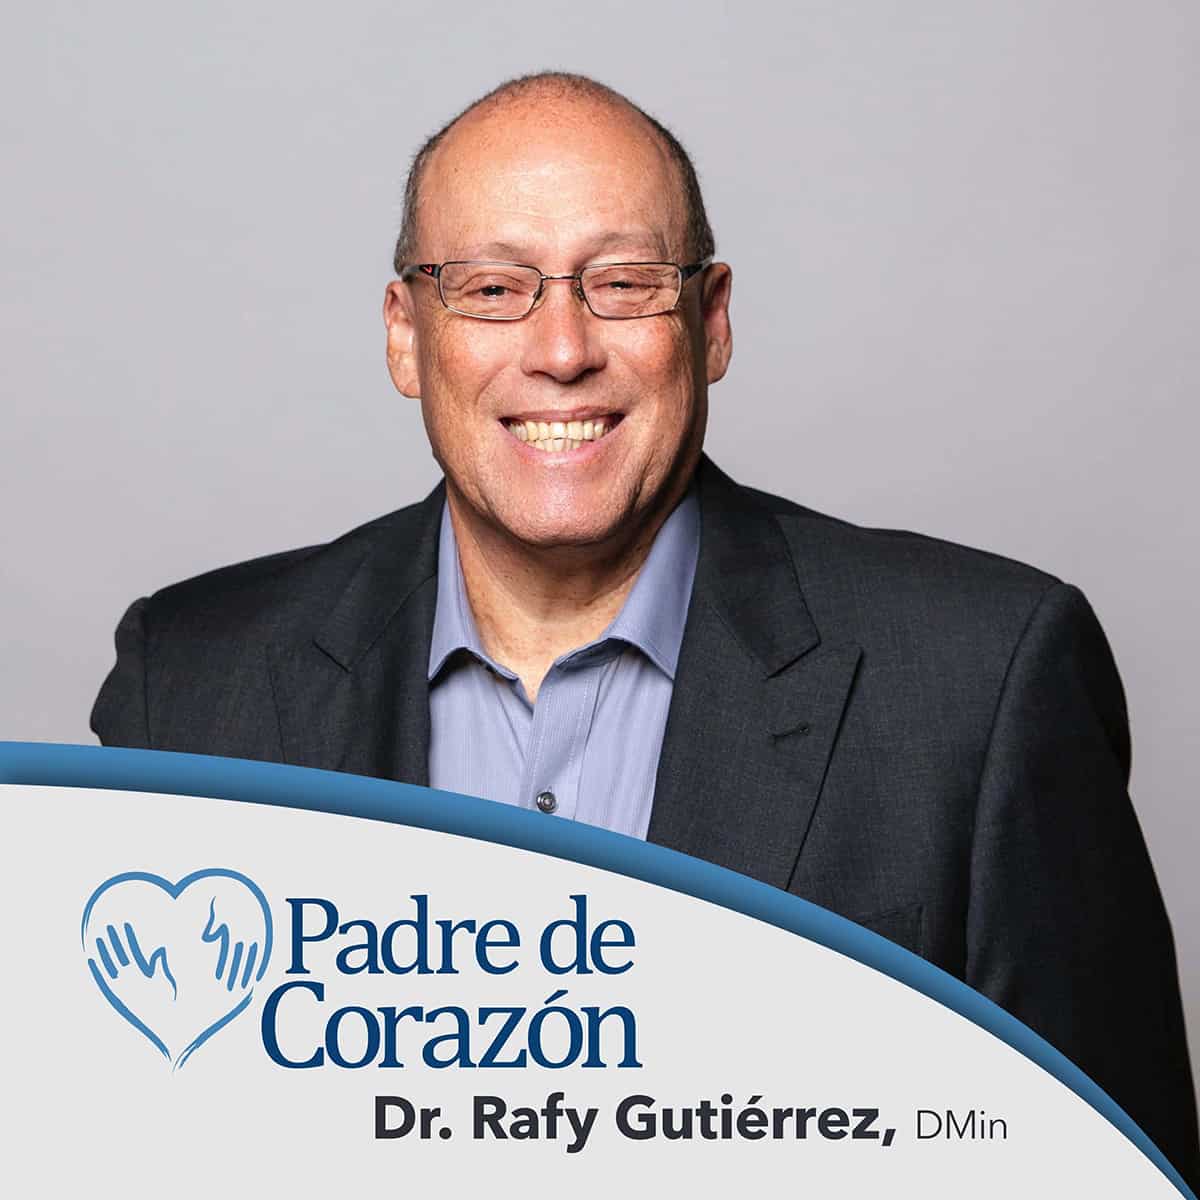 Dr. Rafy Guitiérrez